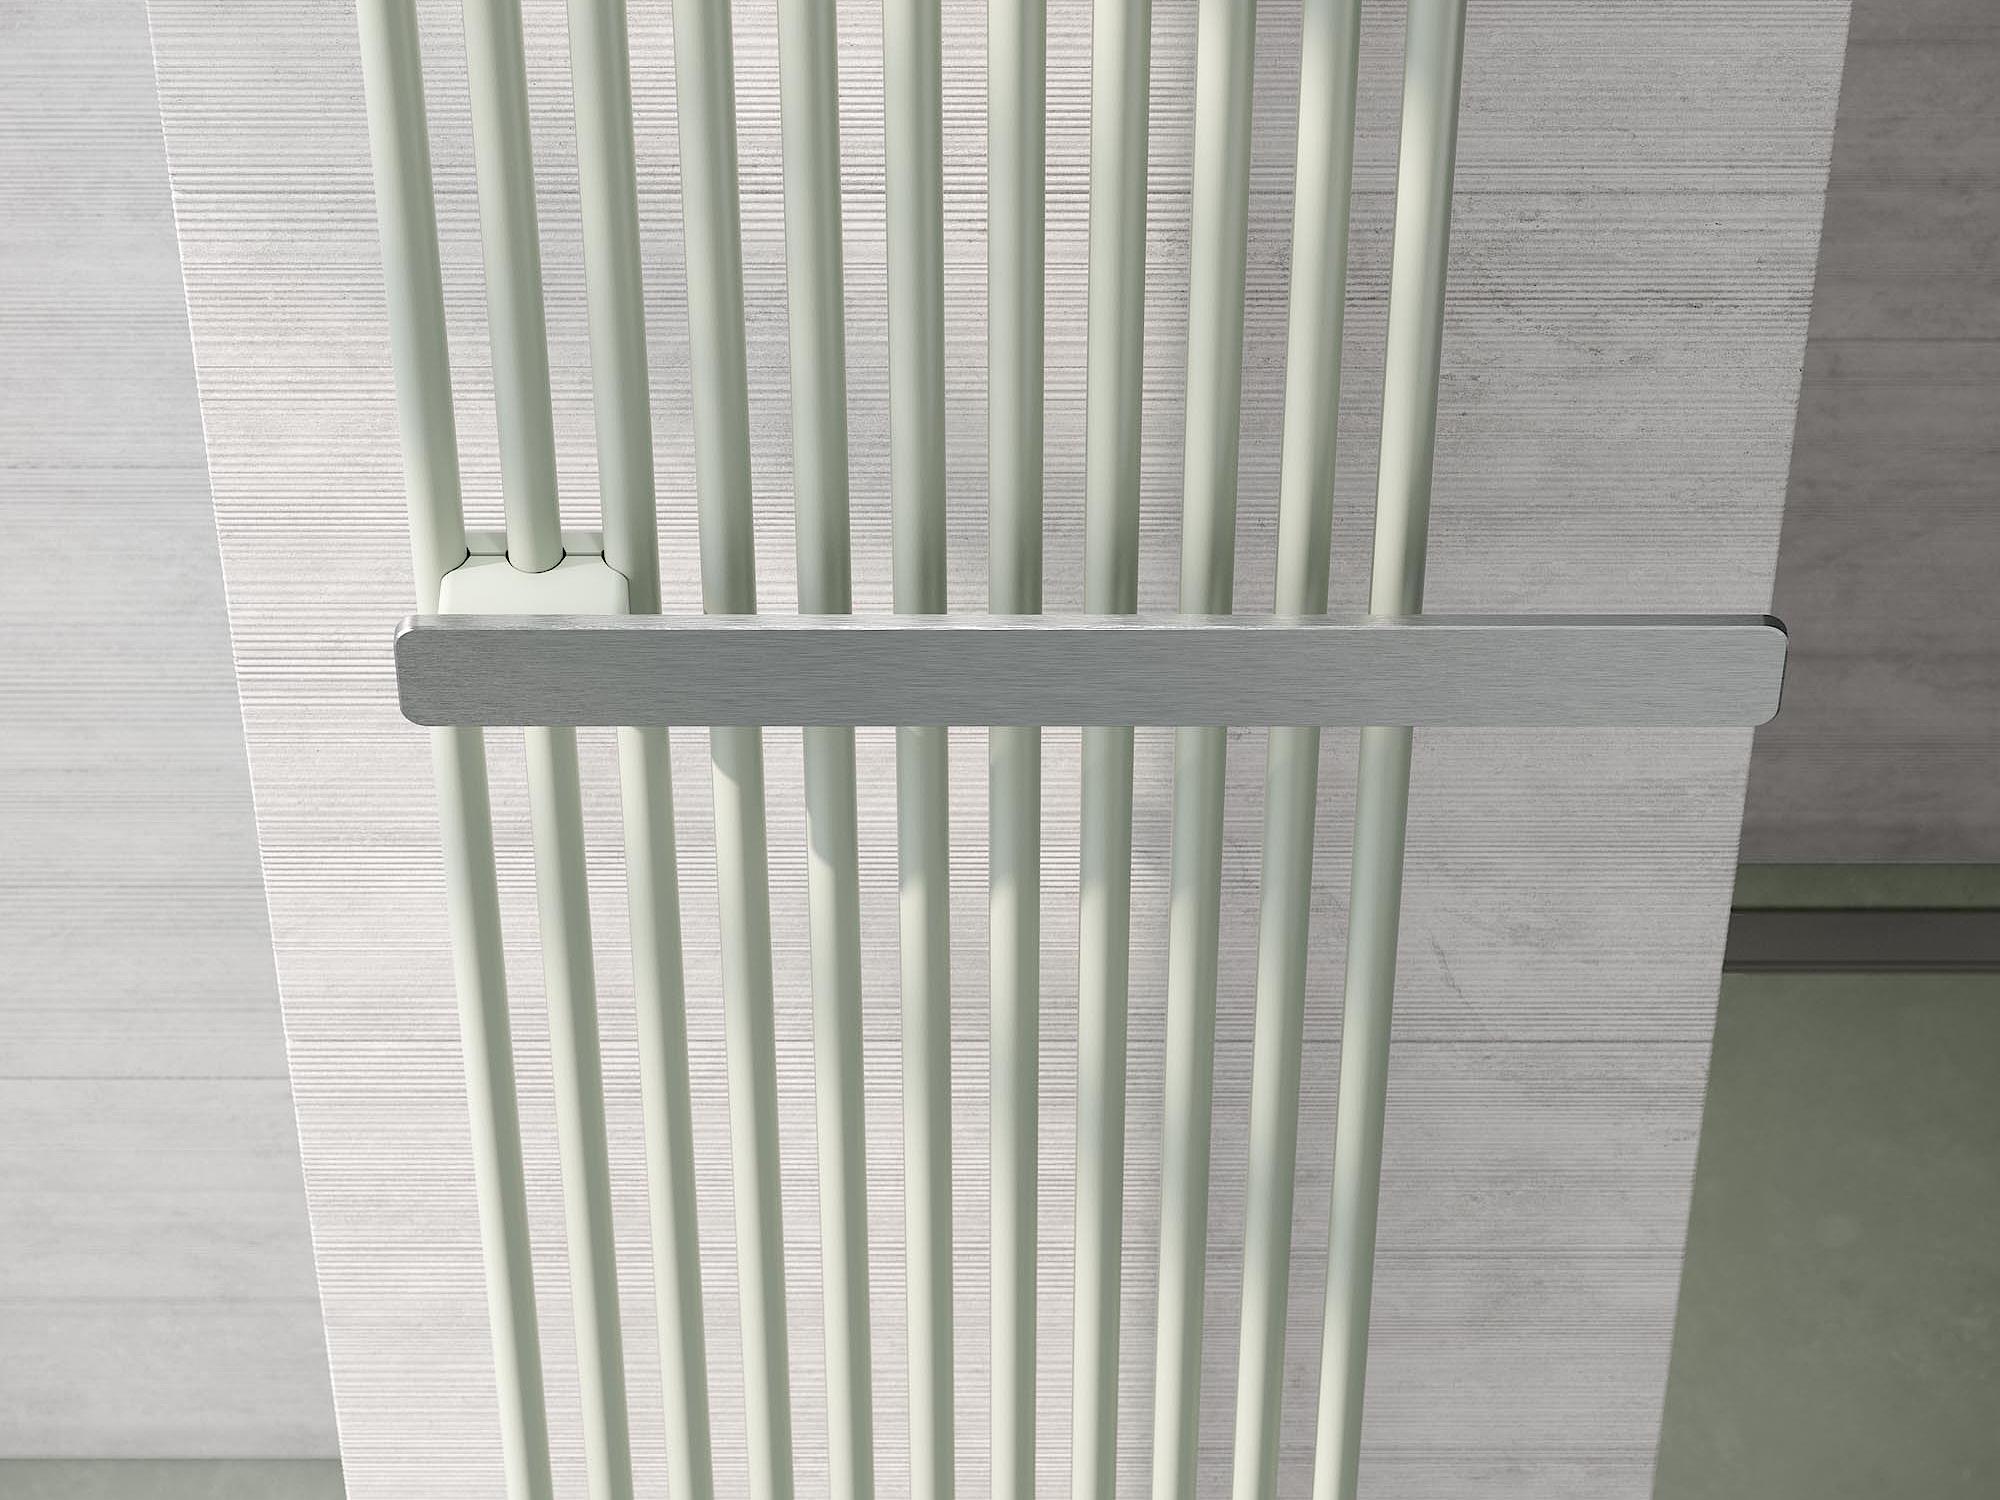 Brushed Stainless Steel towel rail for Kermi Pio plus design and bathroom radiators.